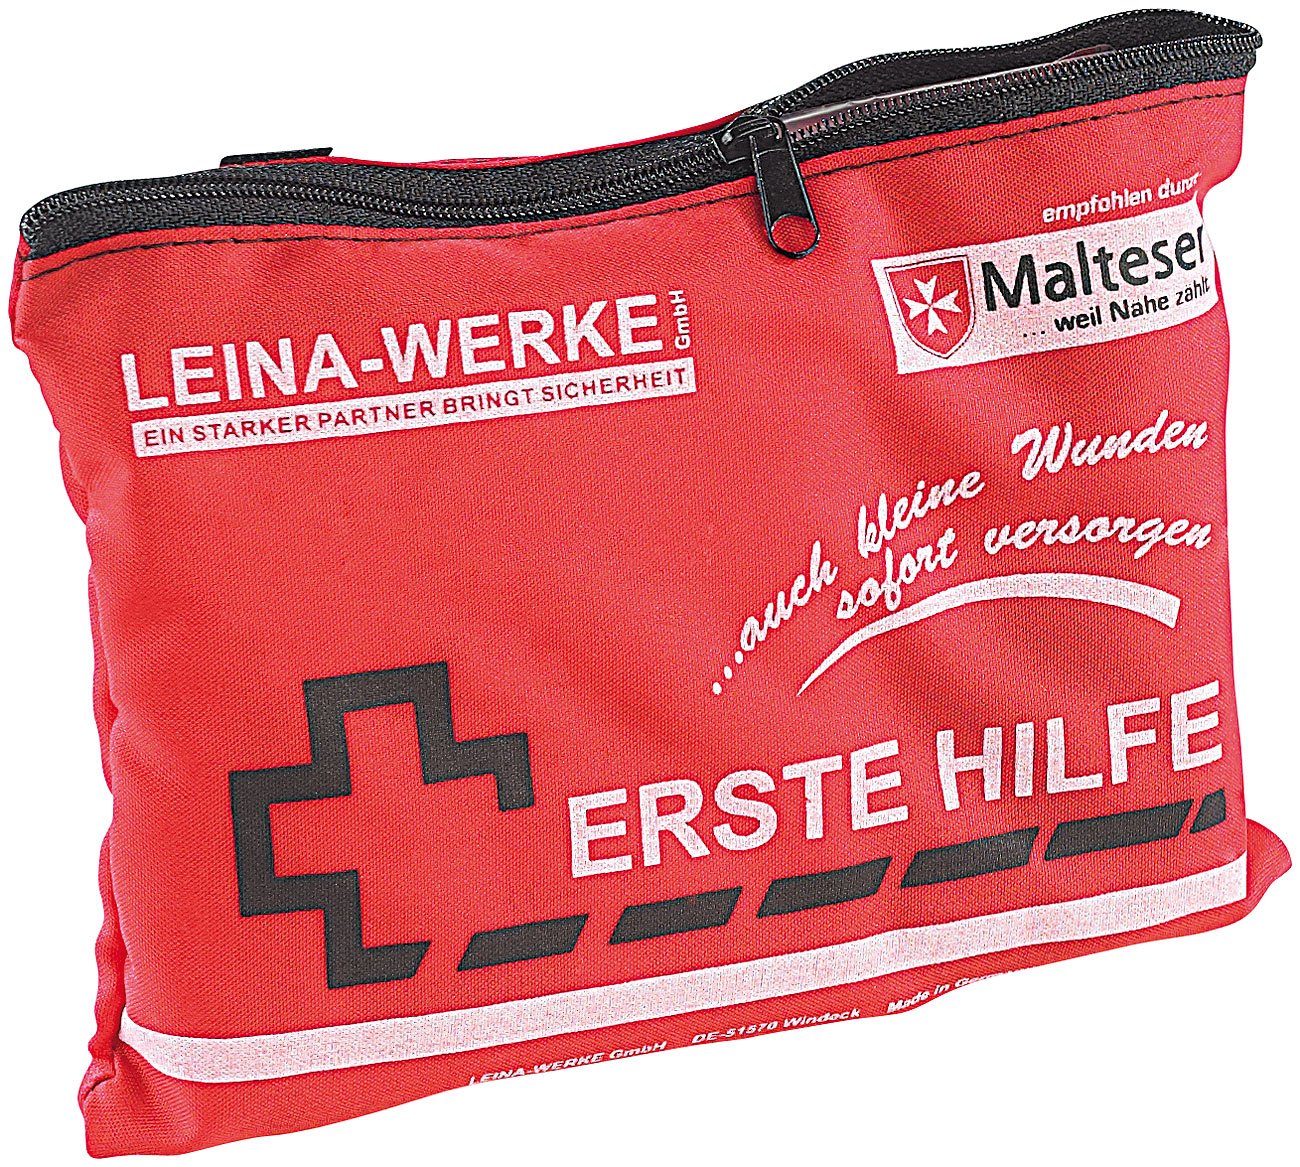 Leina Werke 50000 Mobile first aid kit 2-color red 1 pc. von LEINA-WERKE